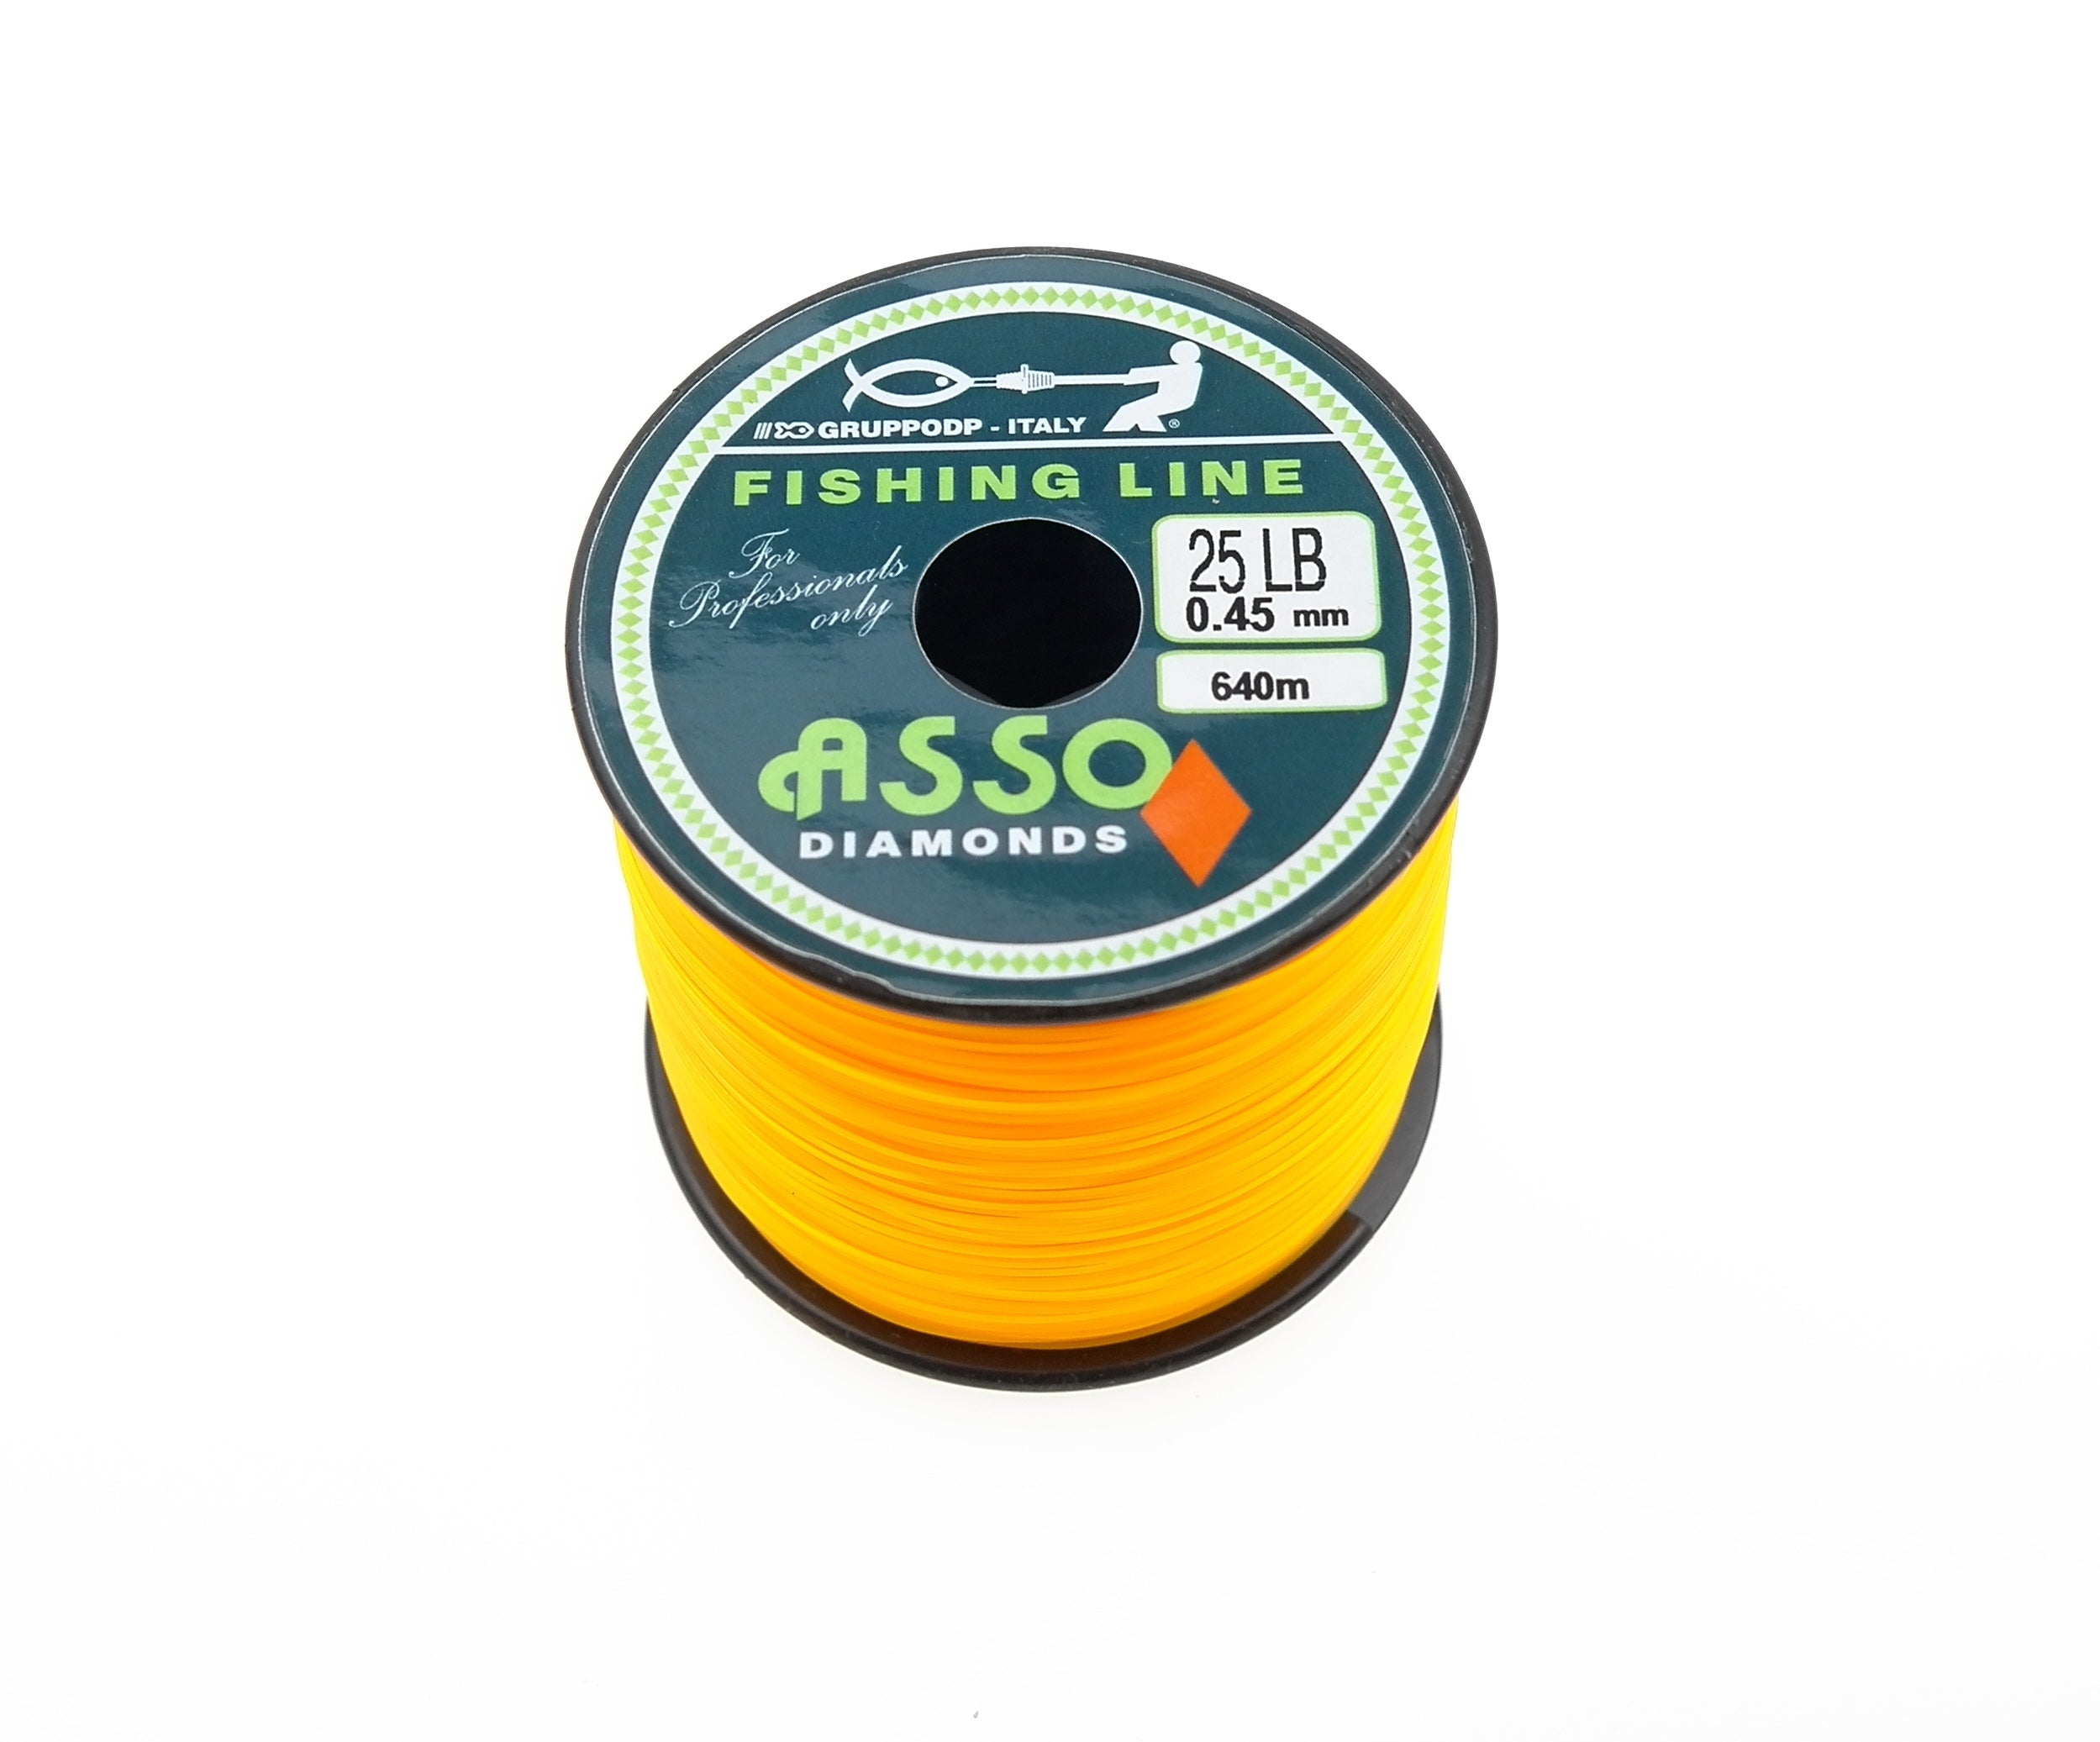 ASSO Hera 50m Orange Monofilament Fishing Line Super Strong